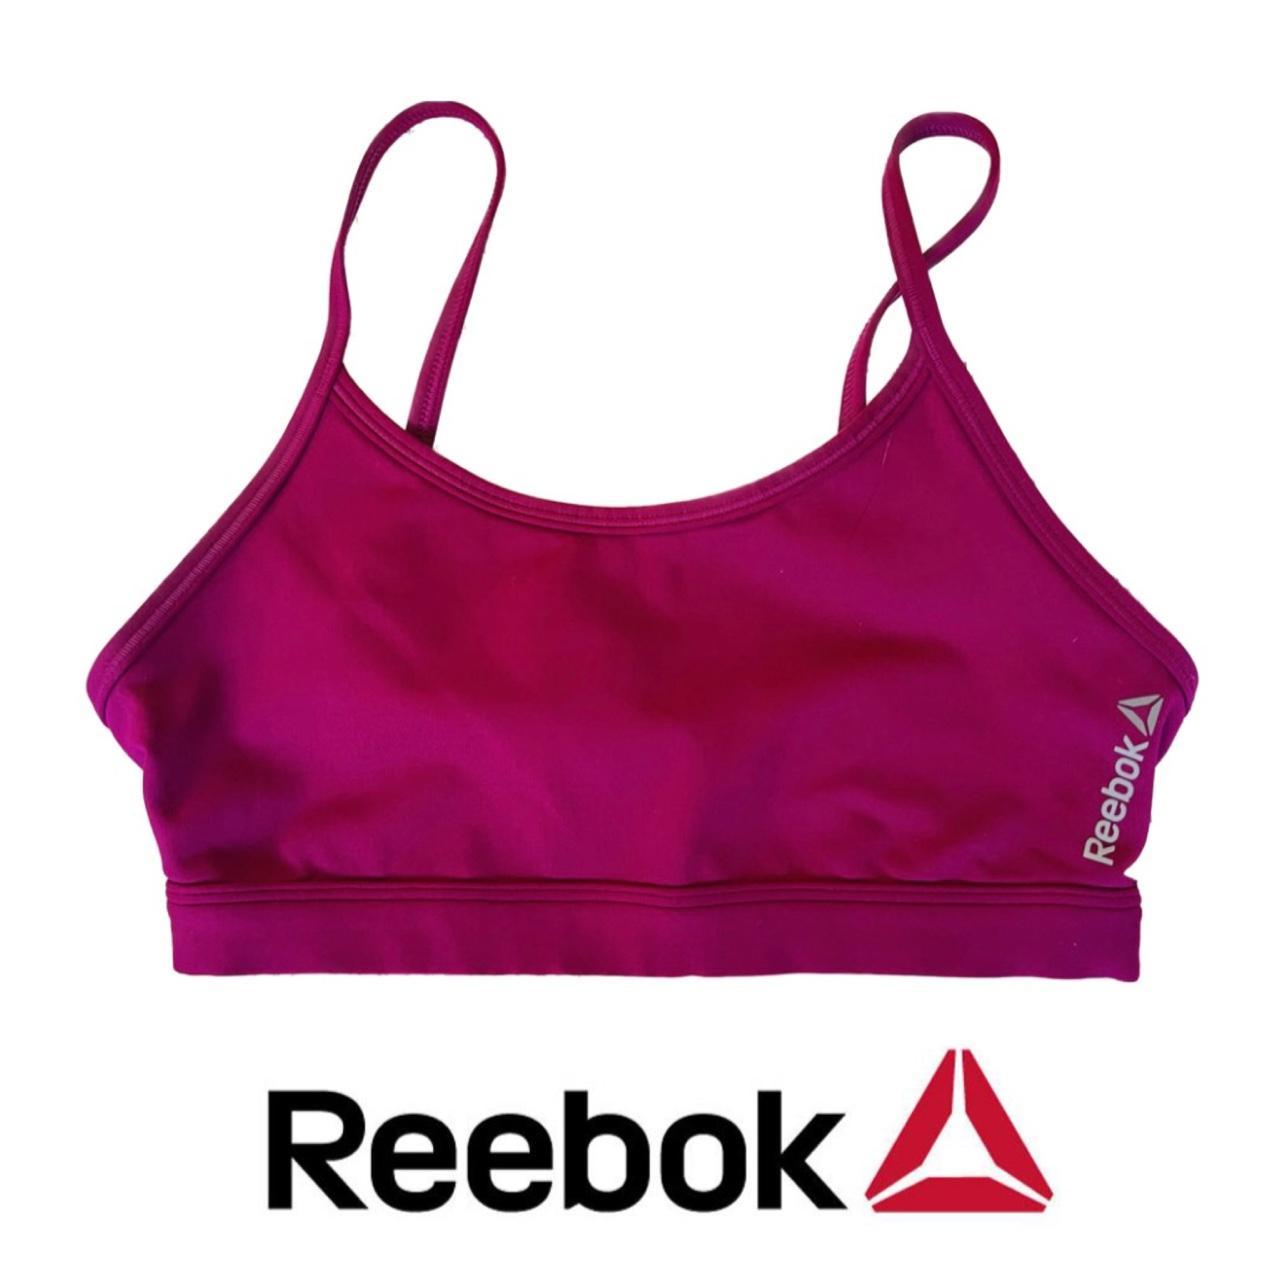 Reebok - Purple/burgundy sports bra, no pads, - Depop